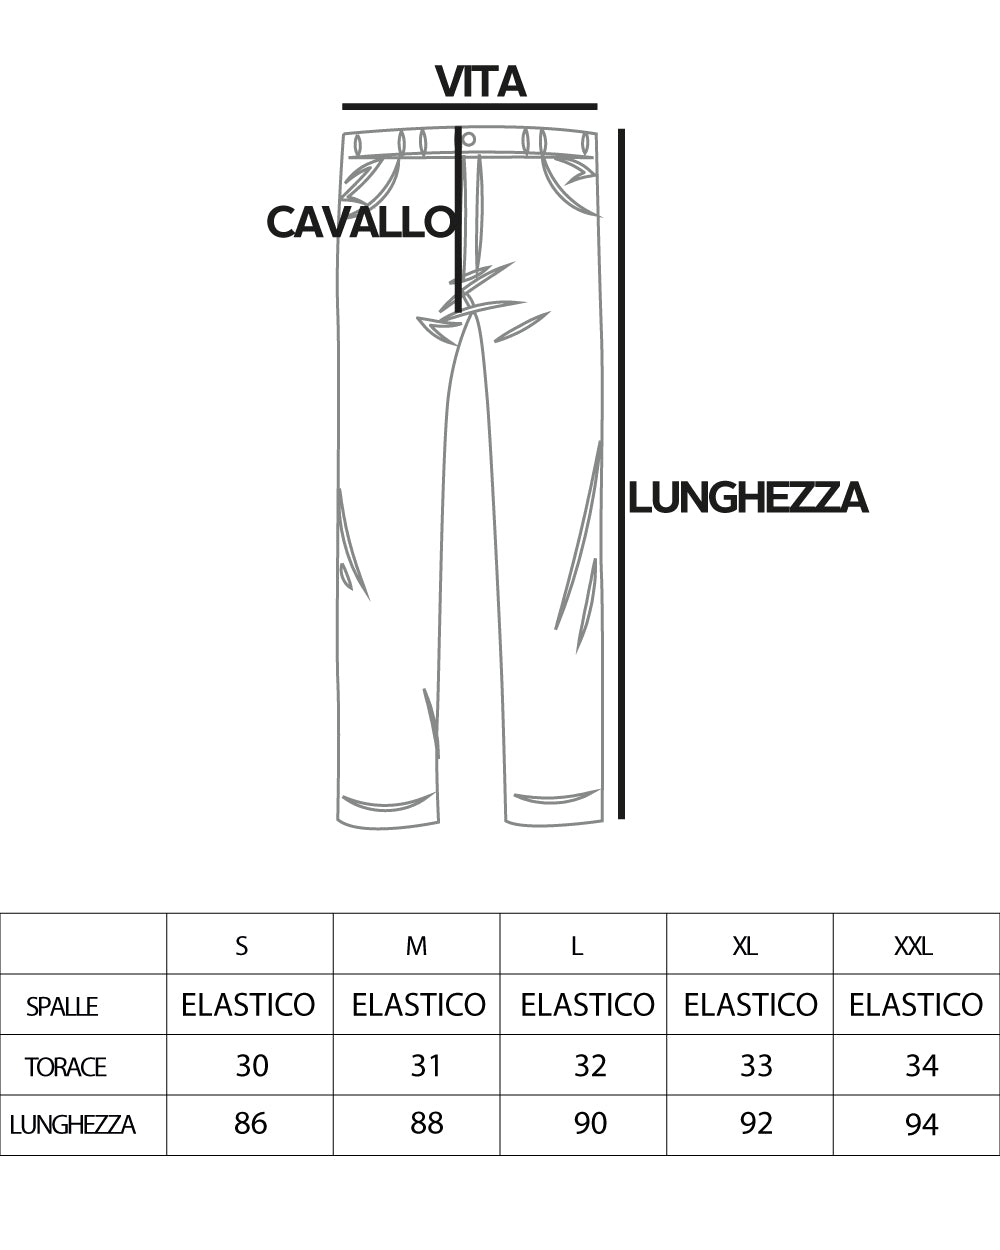 Pantaloni Jeans Uomo Regular Fit Denim Chiaro Pantalaccio Con Rotture Casual GIOSAL-P4083A